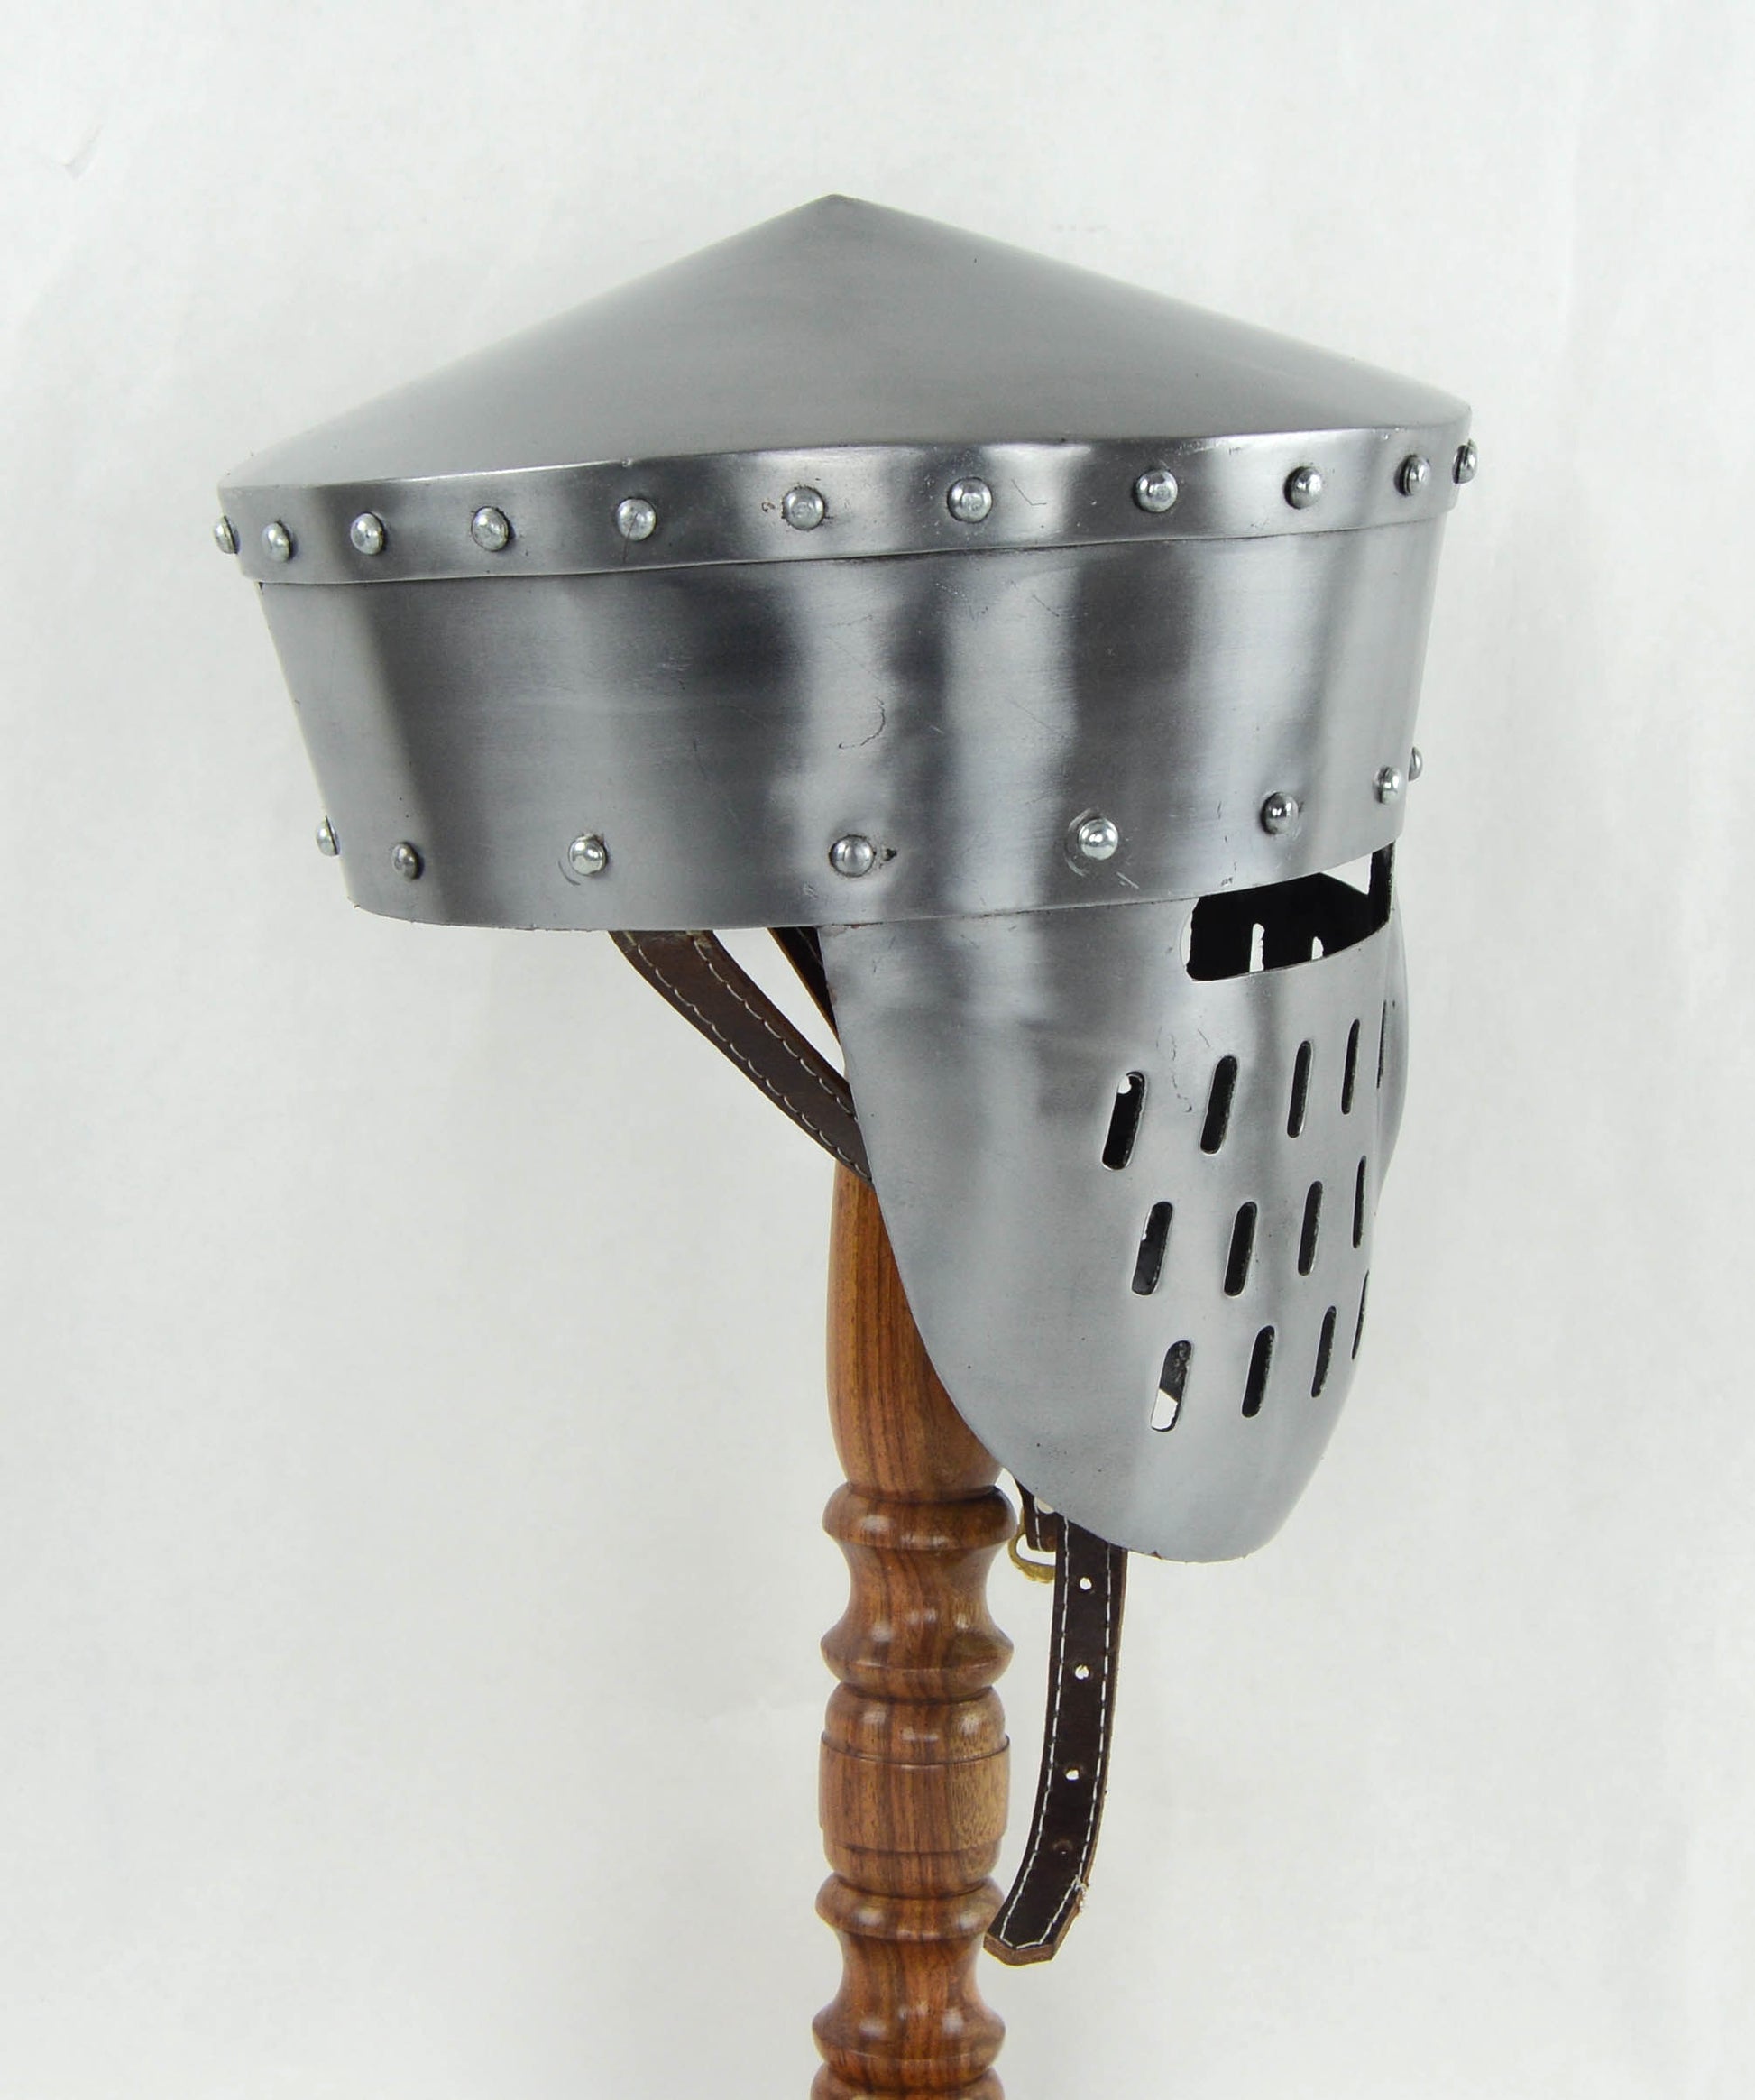 Crusader Peaked Pot Helm with Faceplate - 18 Gauge